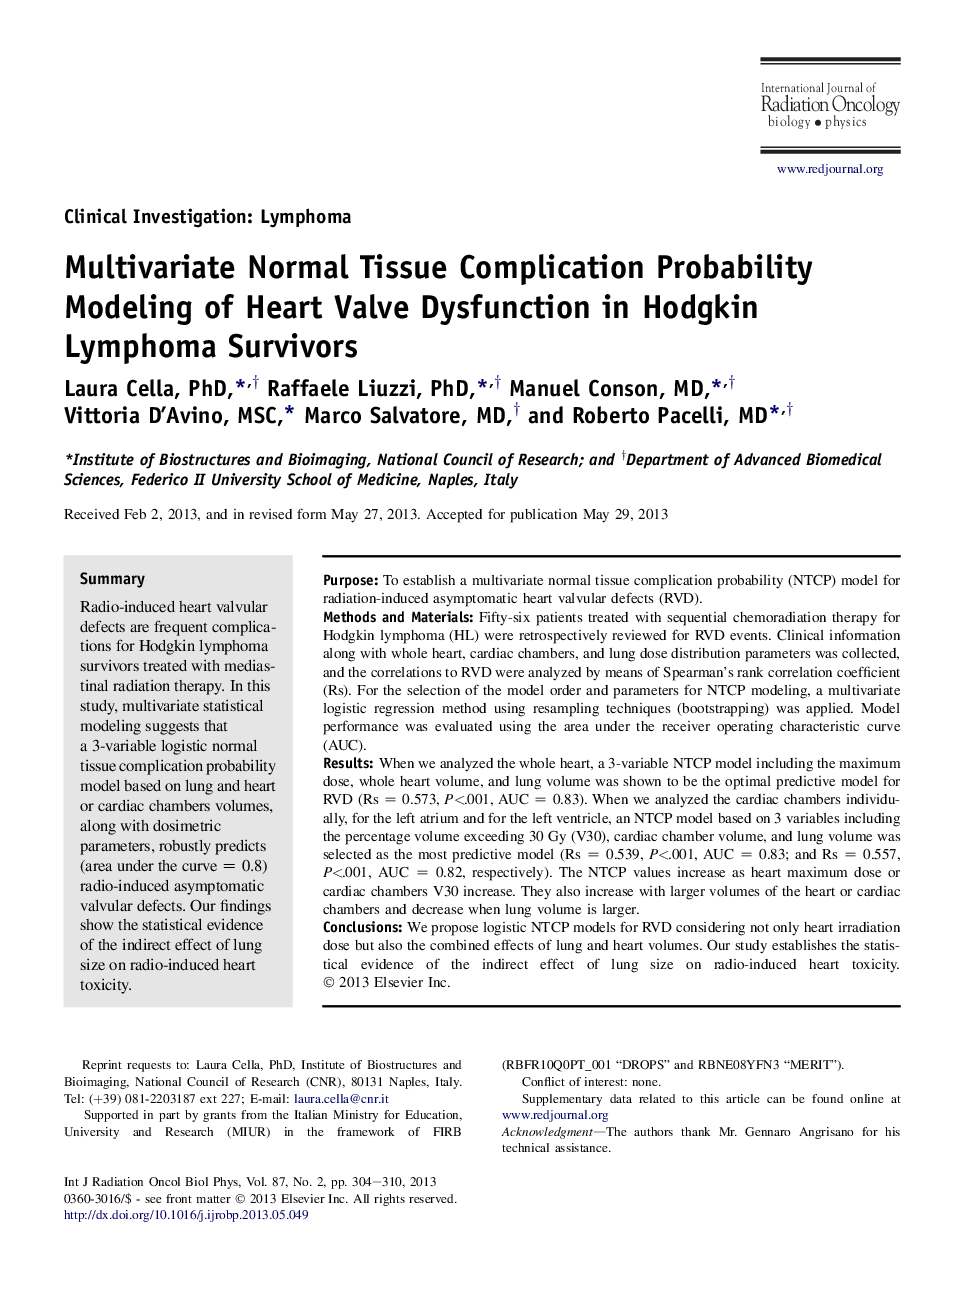 Multivariate Normal Tissue Complication Probability Modeling of Heart Valve Dysfunction in Hodgkin Lymphoma Survivors